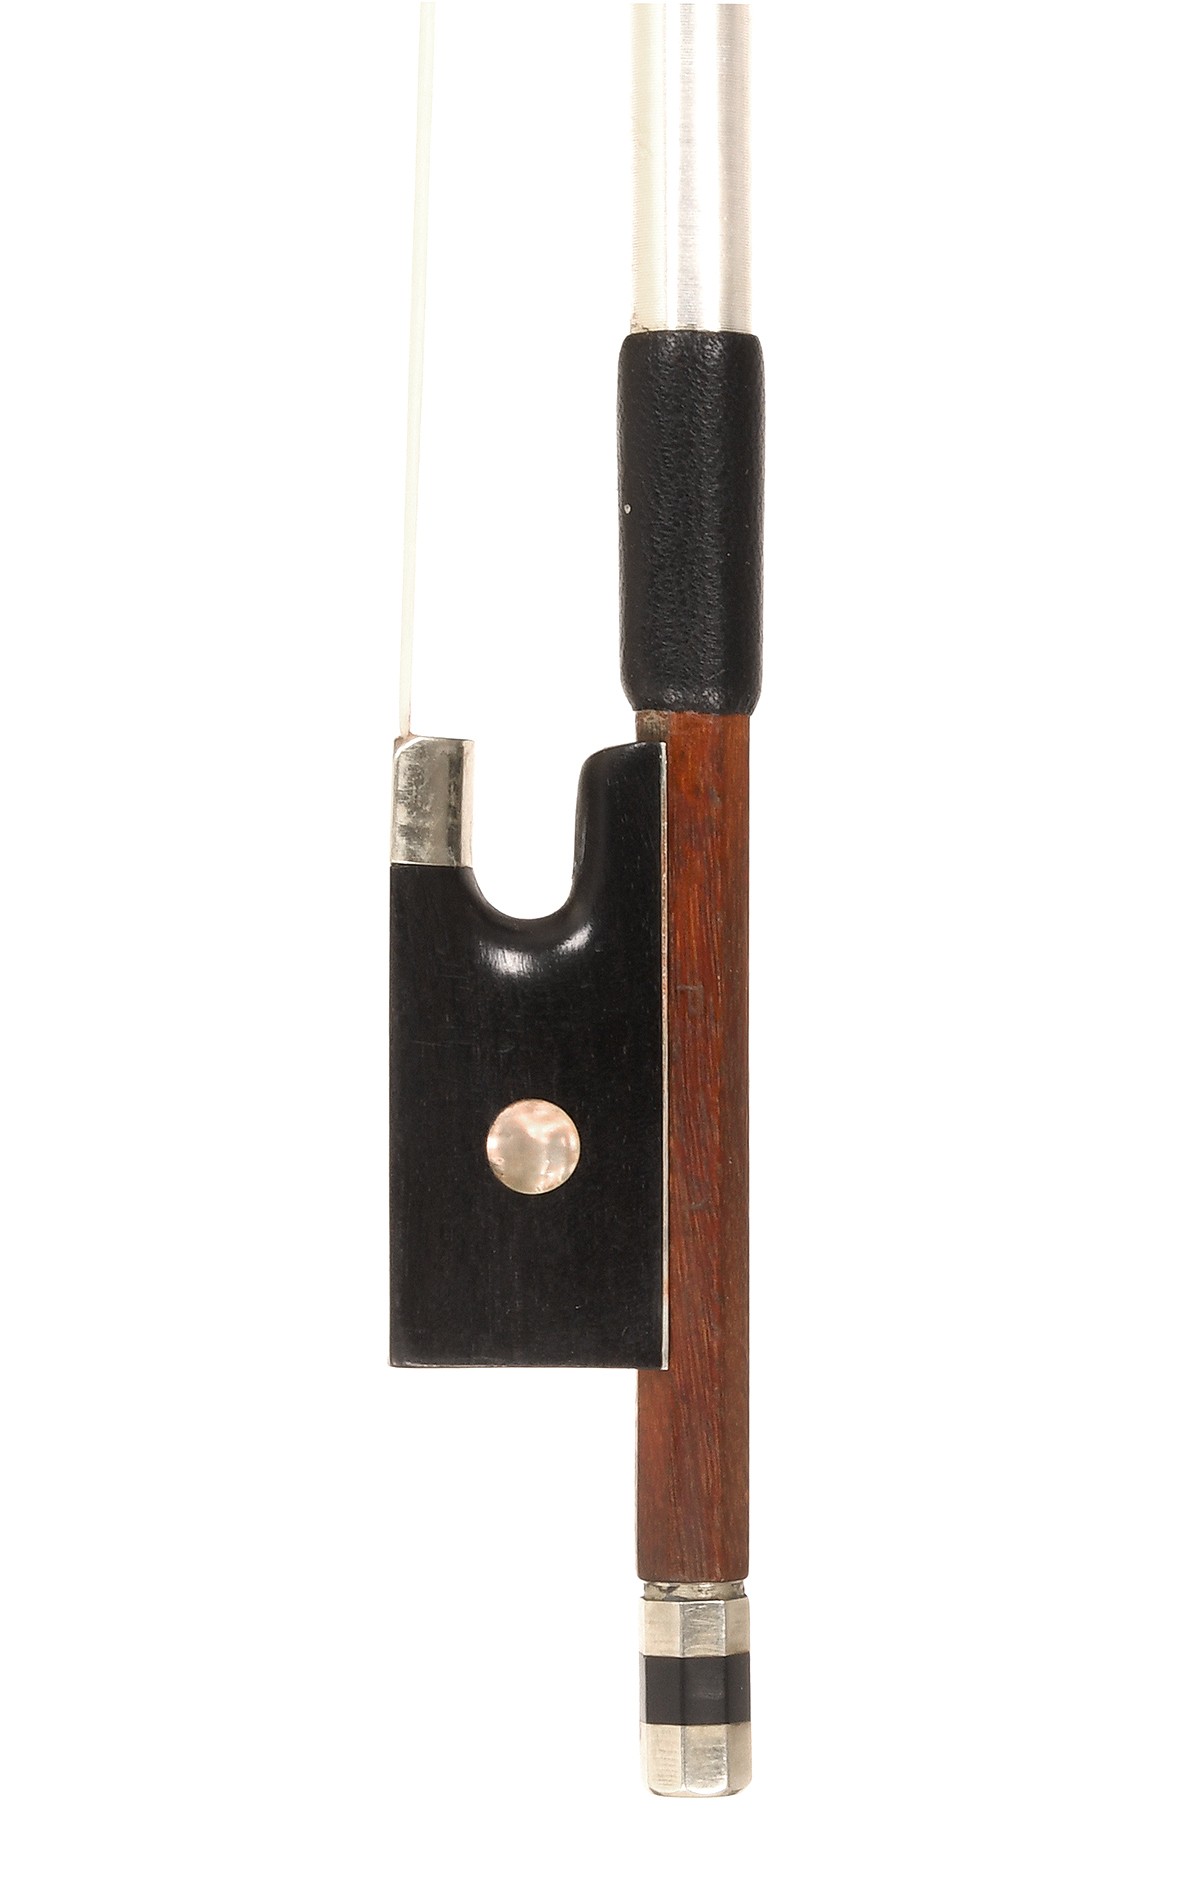 Paesold violin bow